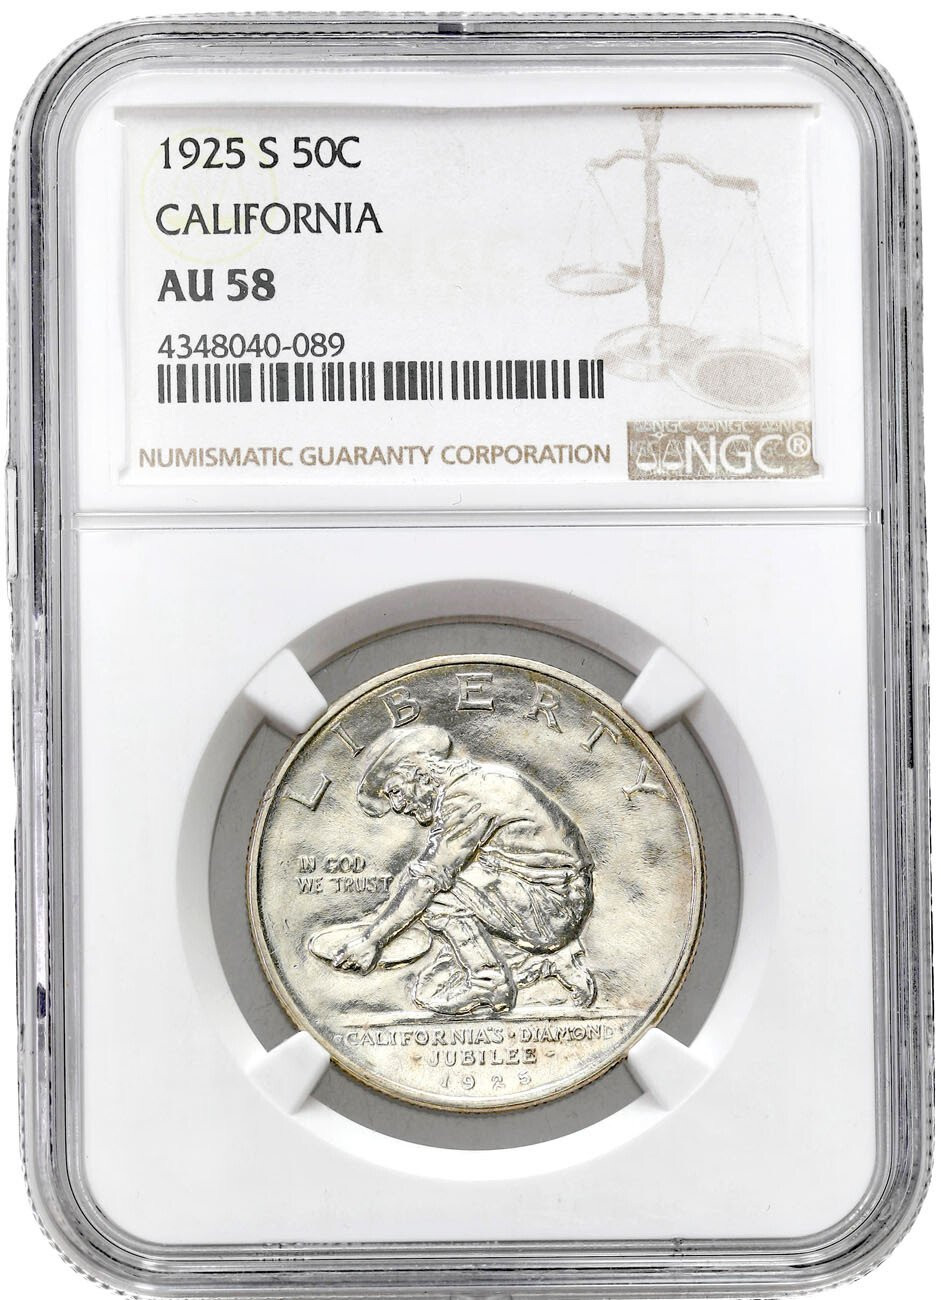 USA. 1/2 dolara (50 centów) 1925 - California, San Francisco NGC AU58 – PIĘKNE